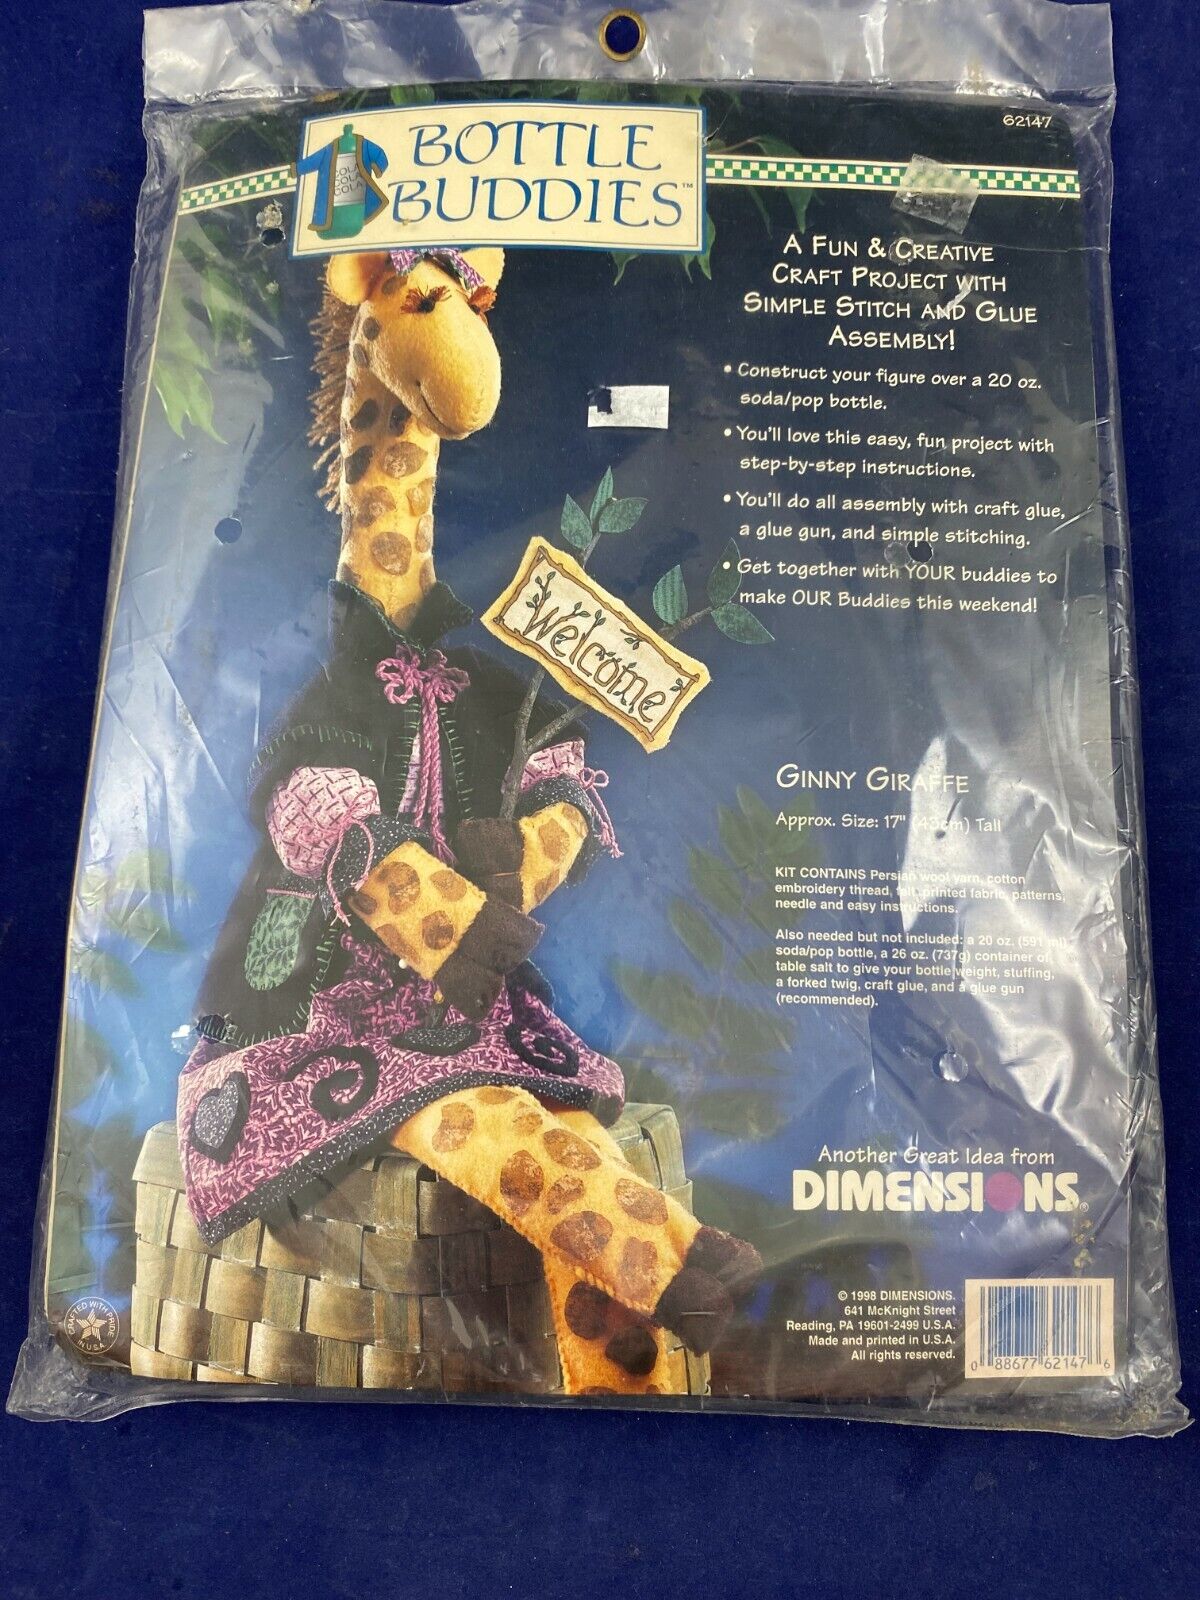 vintage dimensions  bottle buddies kit 62147 Ginny Giraffe 17" Tall NIP 1998